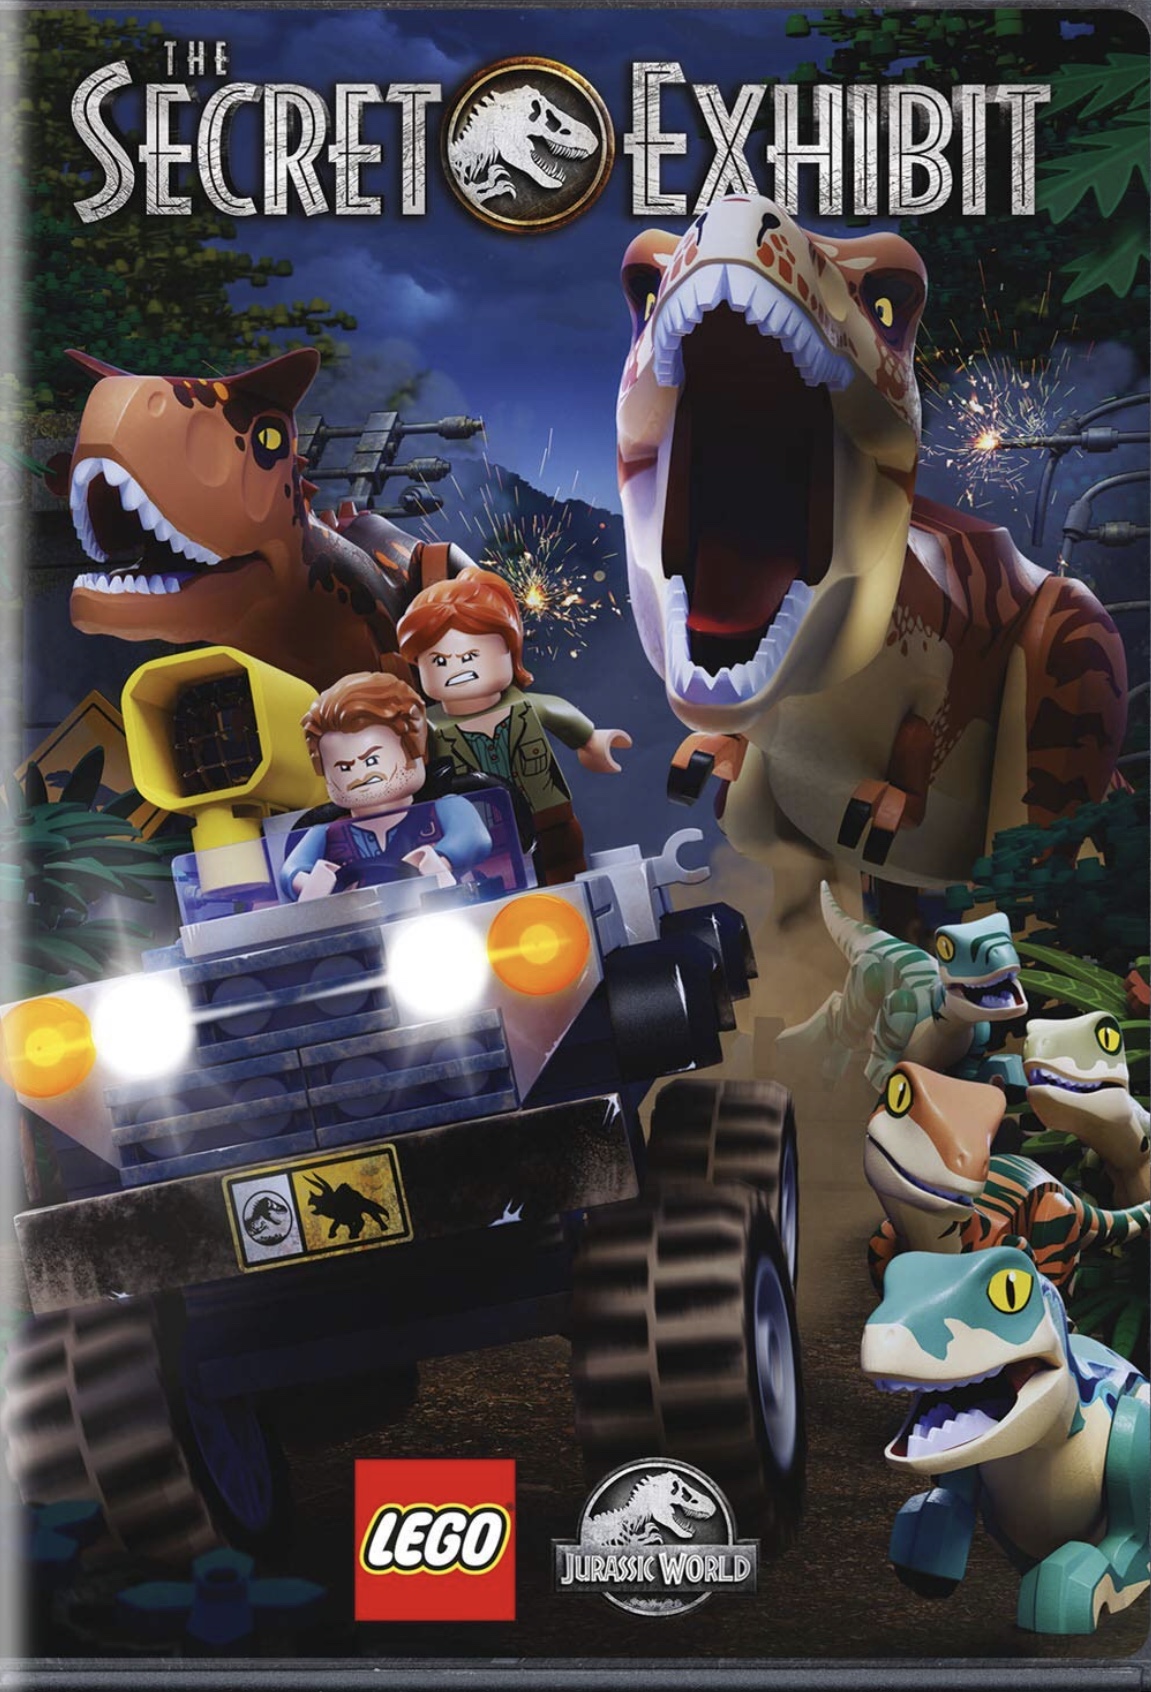 Lego Jurassic World: The Secret Exhibit (TV Mini Series 2018) - IMDb